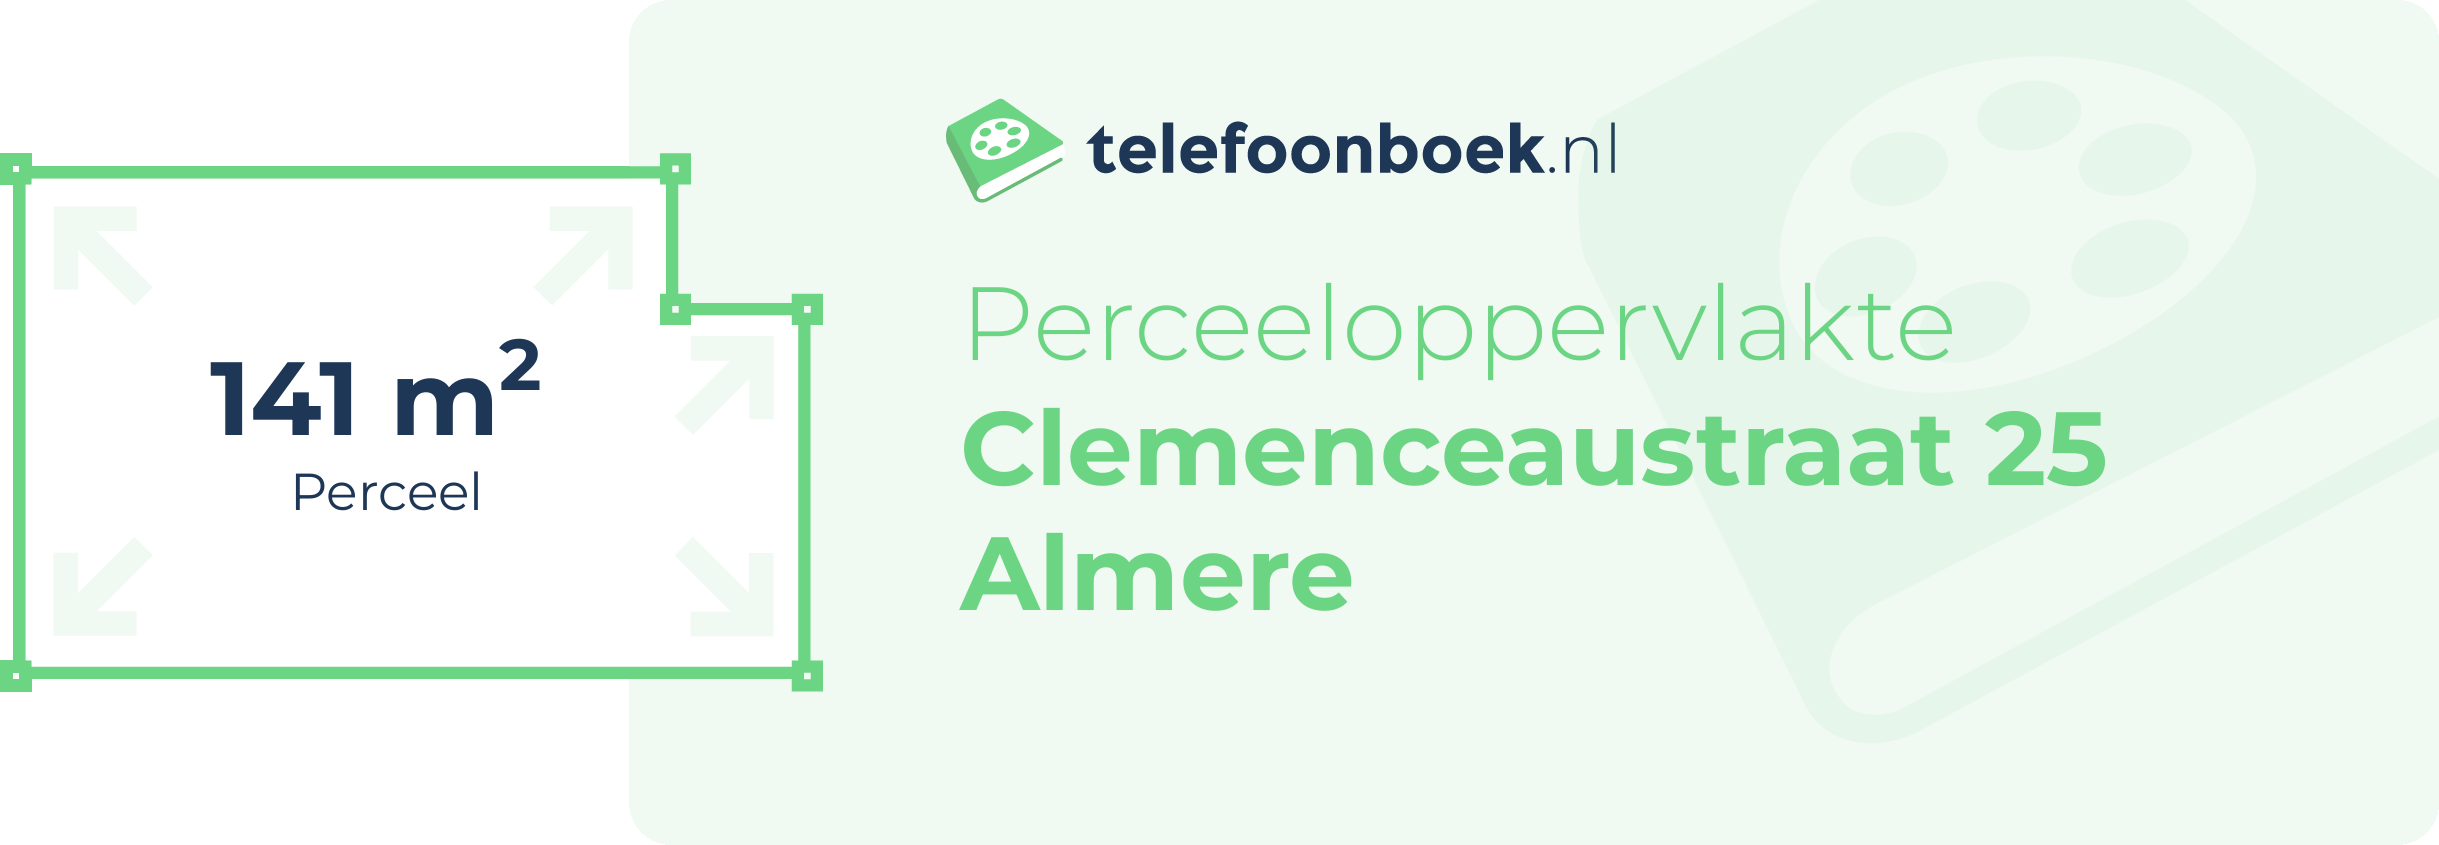 Perceeloppervlakte Clemenceaustraat 25 Almere